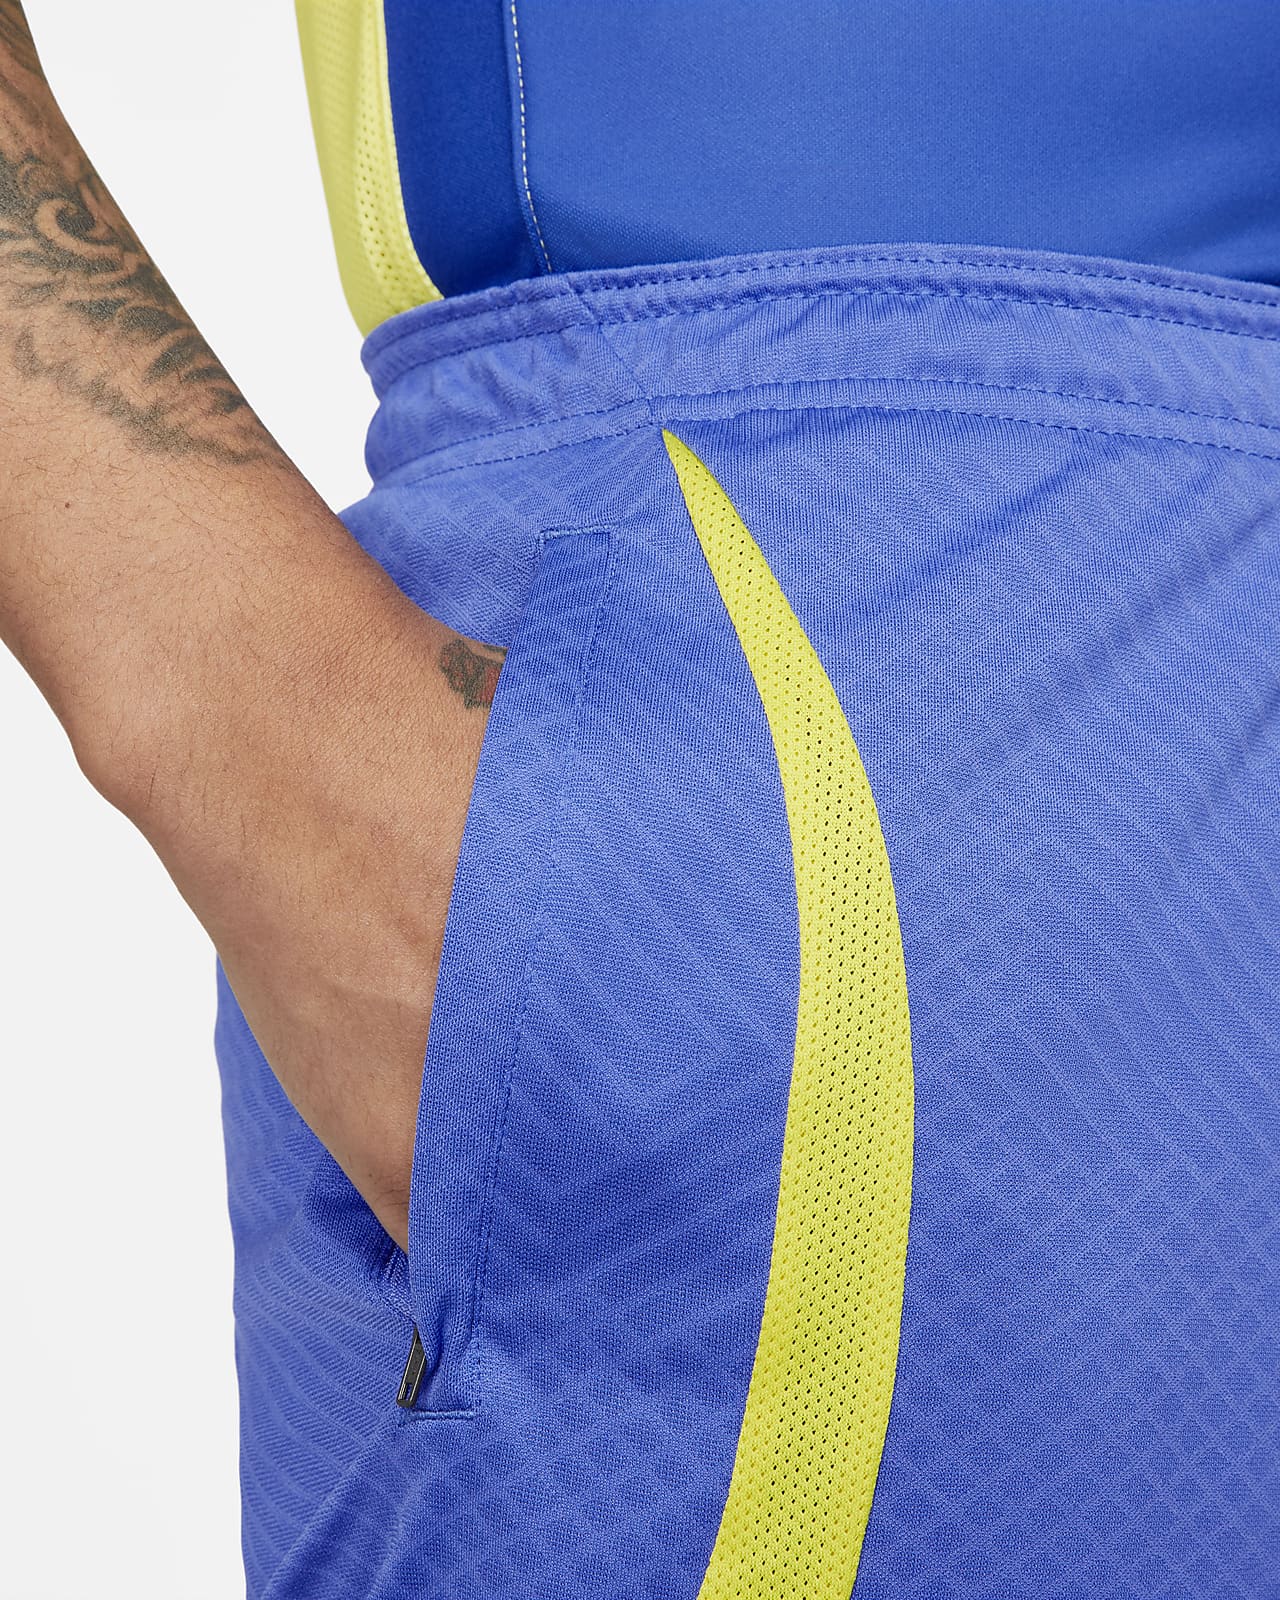 Nike Dri-Fit Men's Soccer Jersey, Medium, Opti Yellow